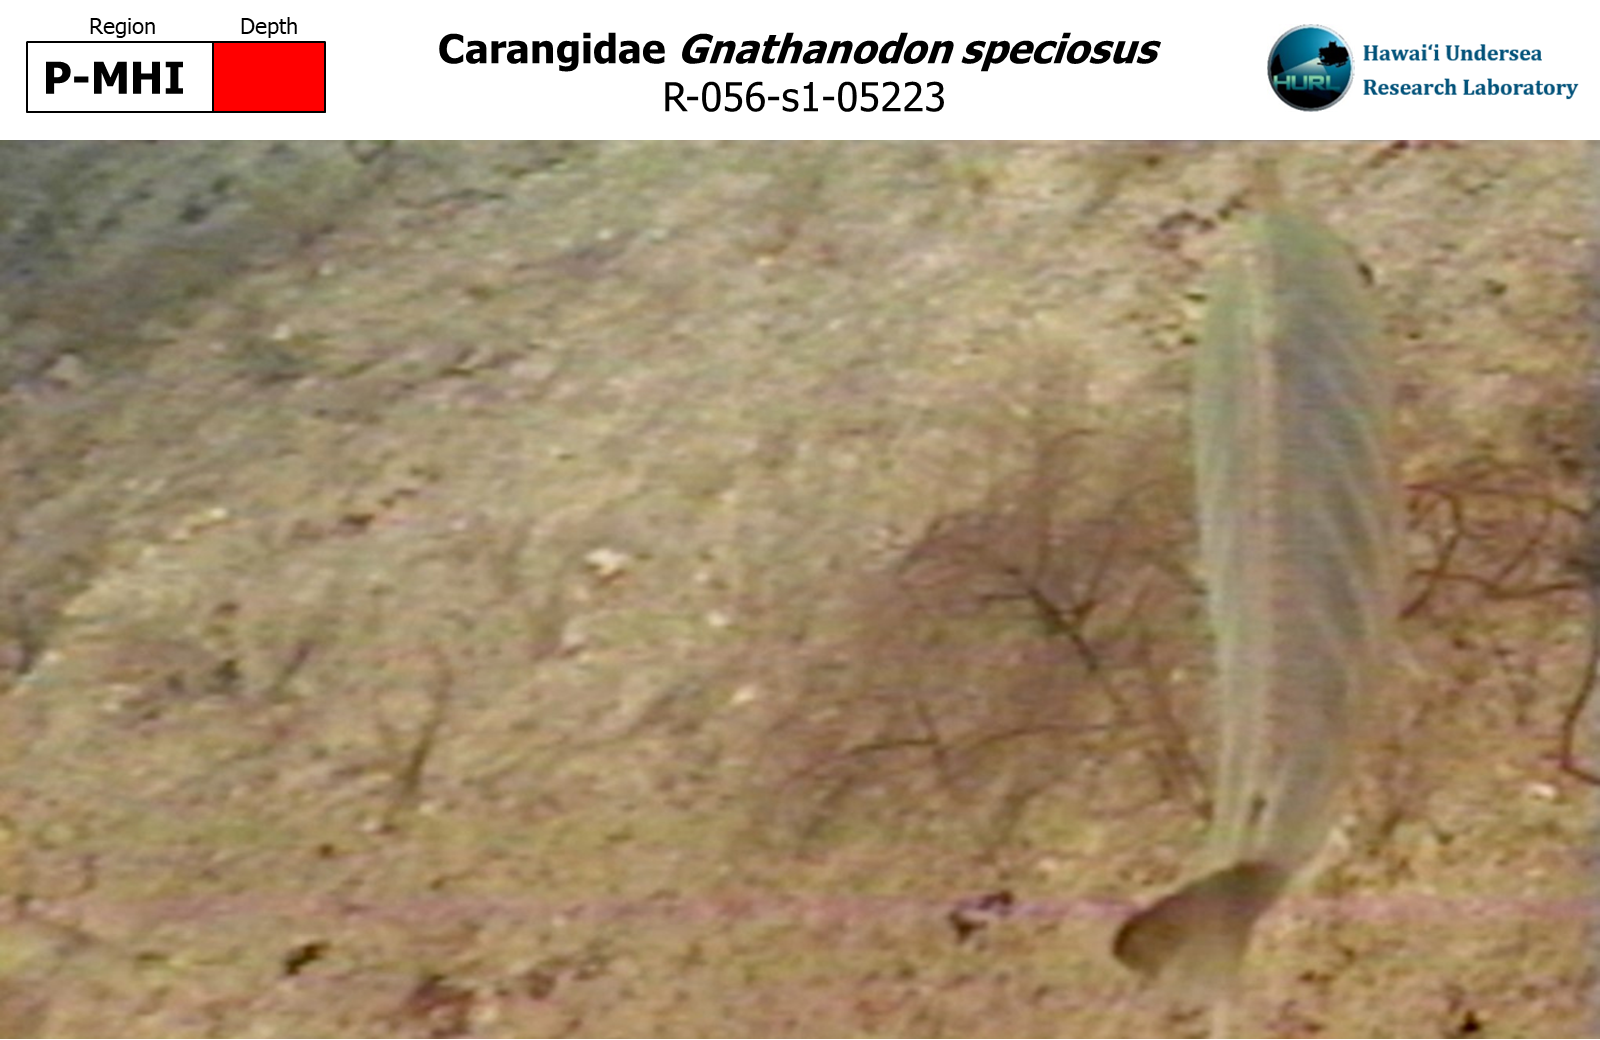 Gnathanodon speciosus